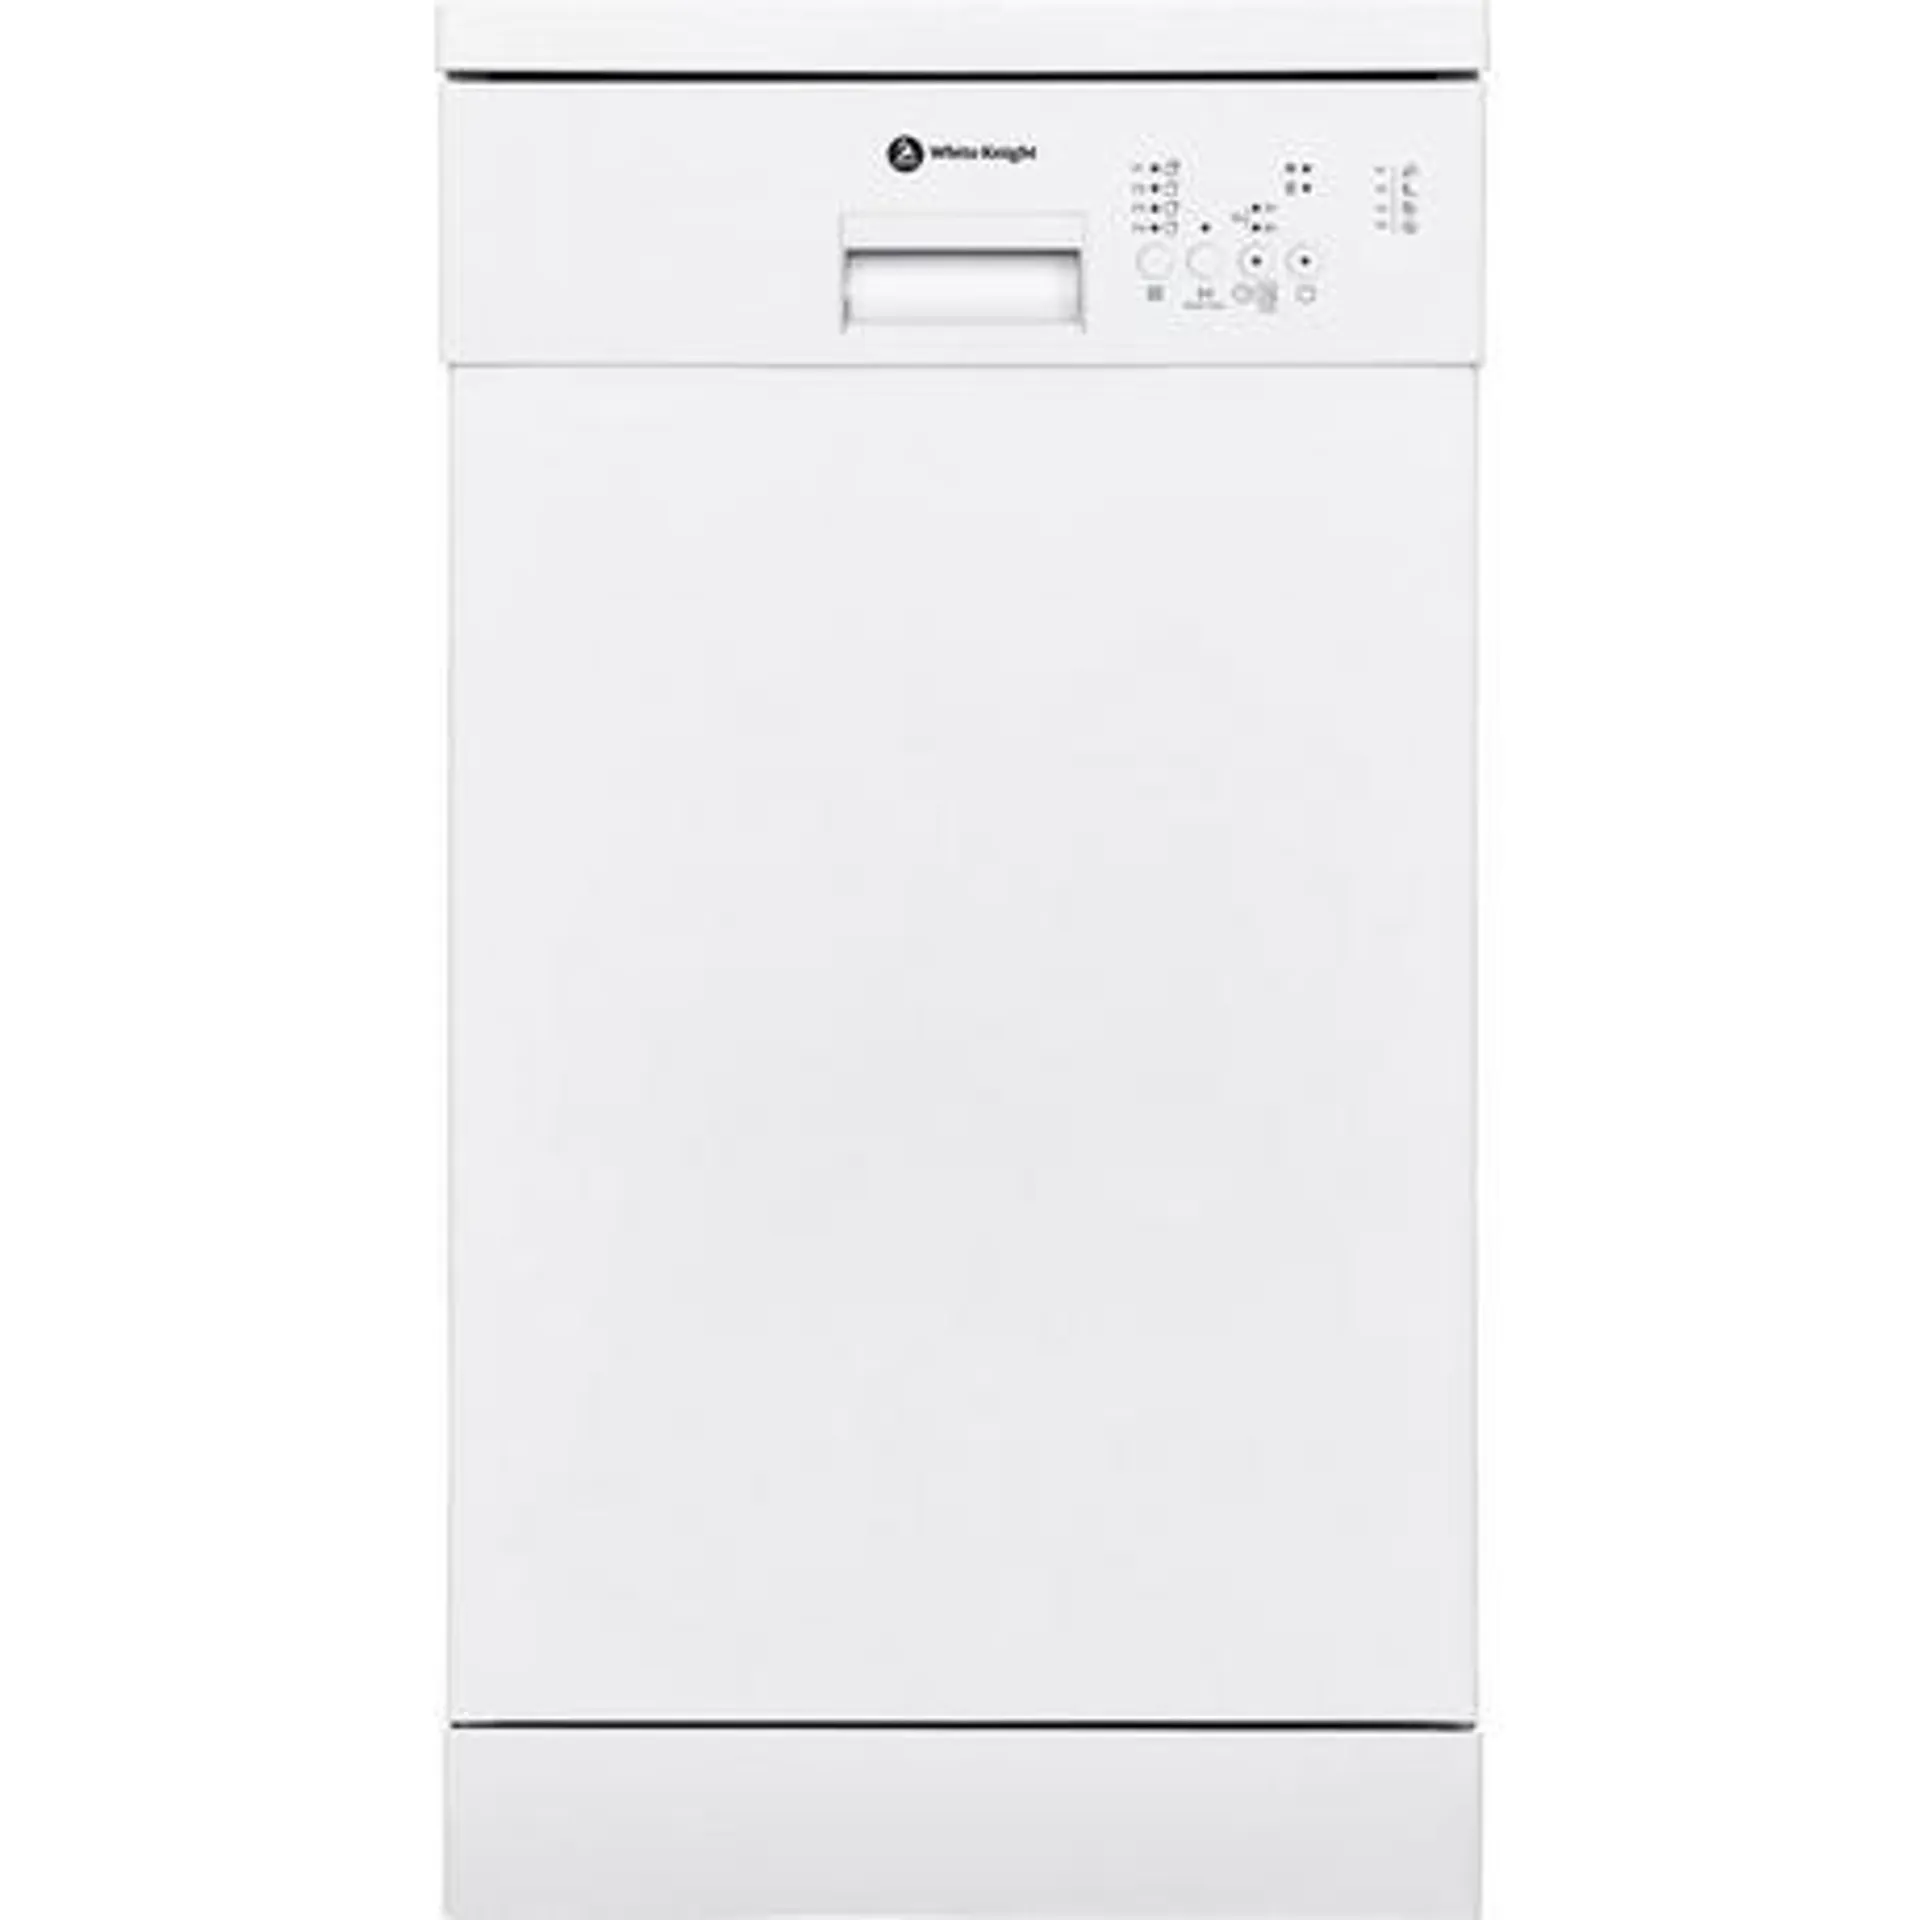 White Knight FS45DW52W 45cm Slimline Dishwasher - White - 10 Place Settings